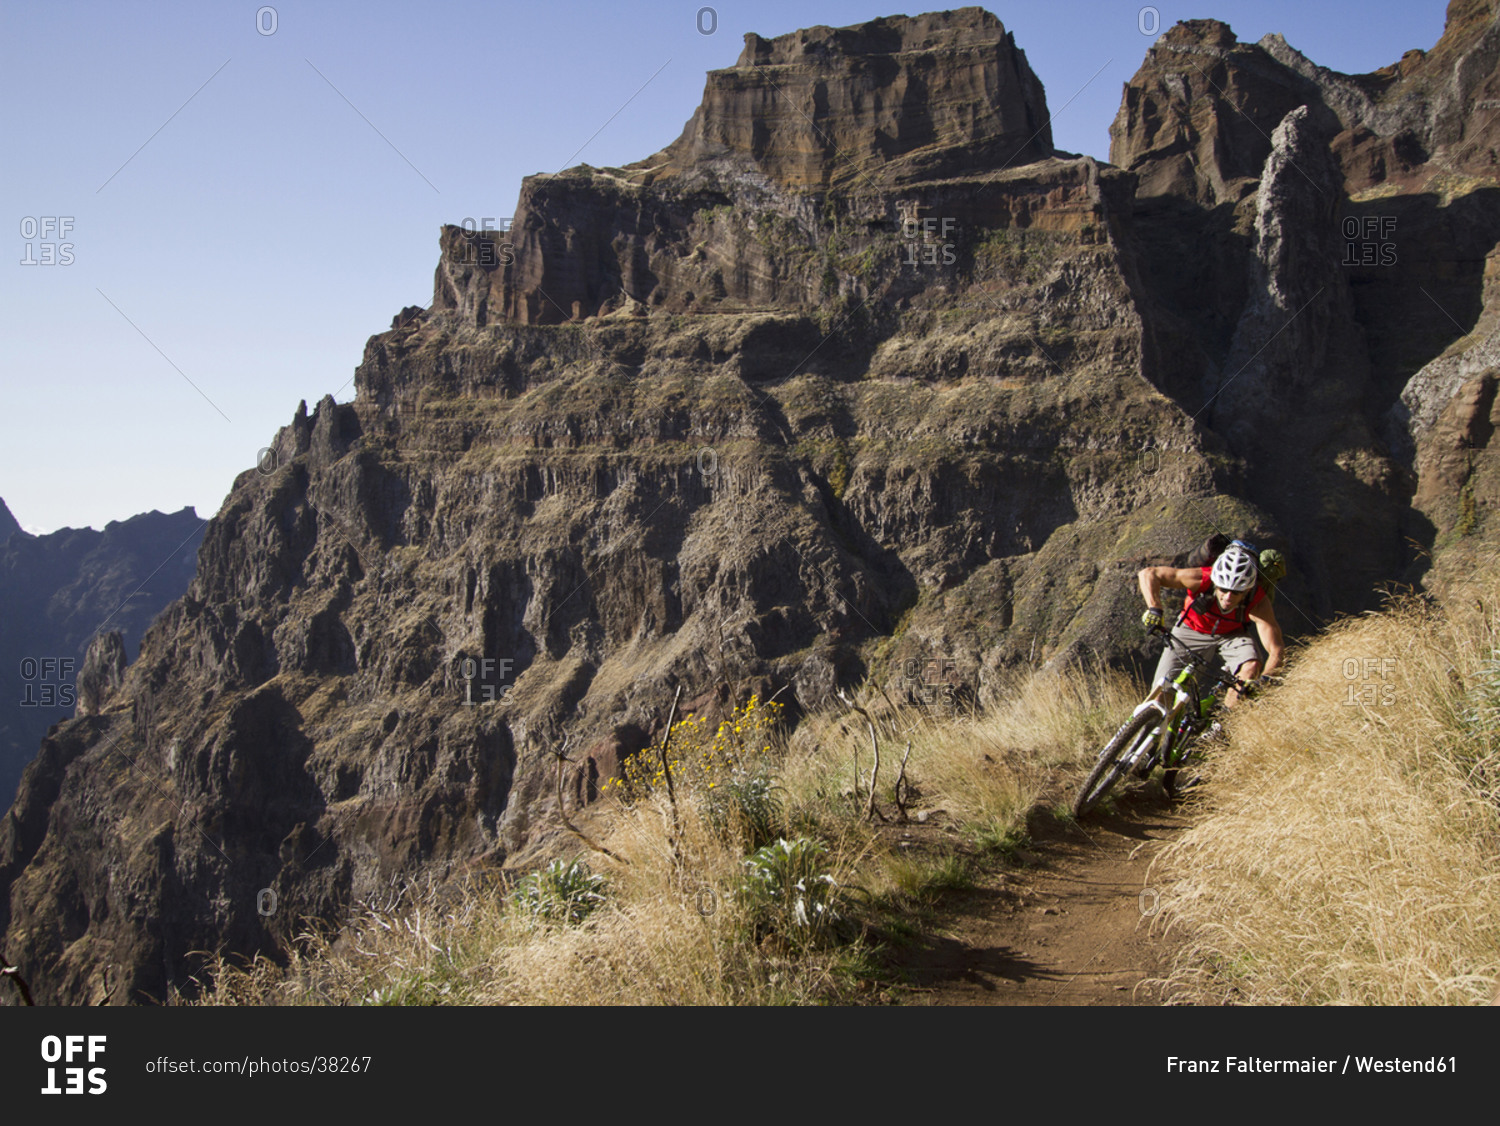 Portugal, Madeira, Mature man riding mountain bike